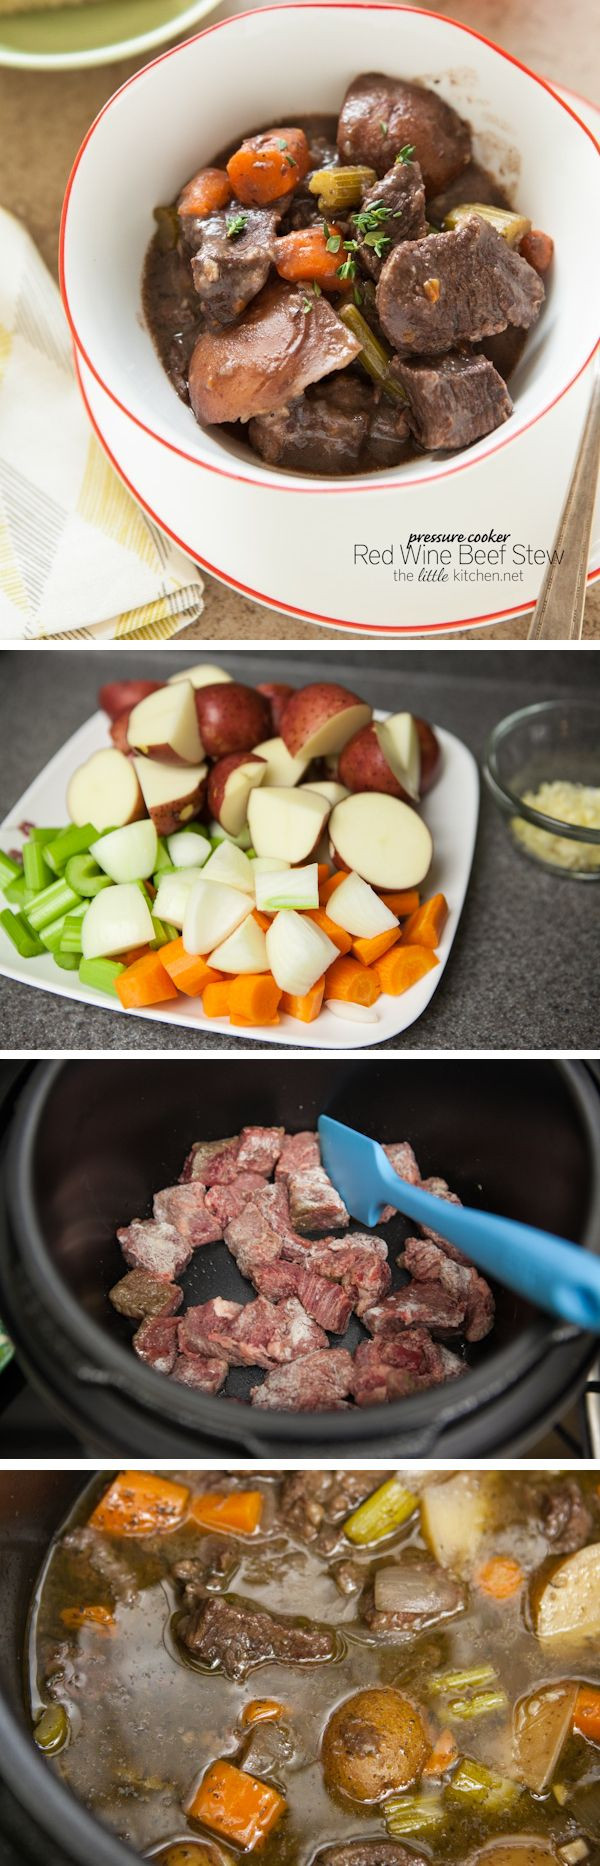 Power Pressure Cooker Xl Recipes Beef Stew
 30 best Power Pressure Cooker XL recipes images on